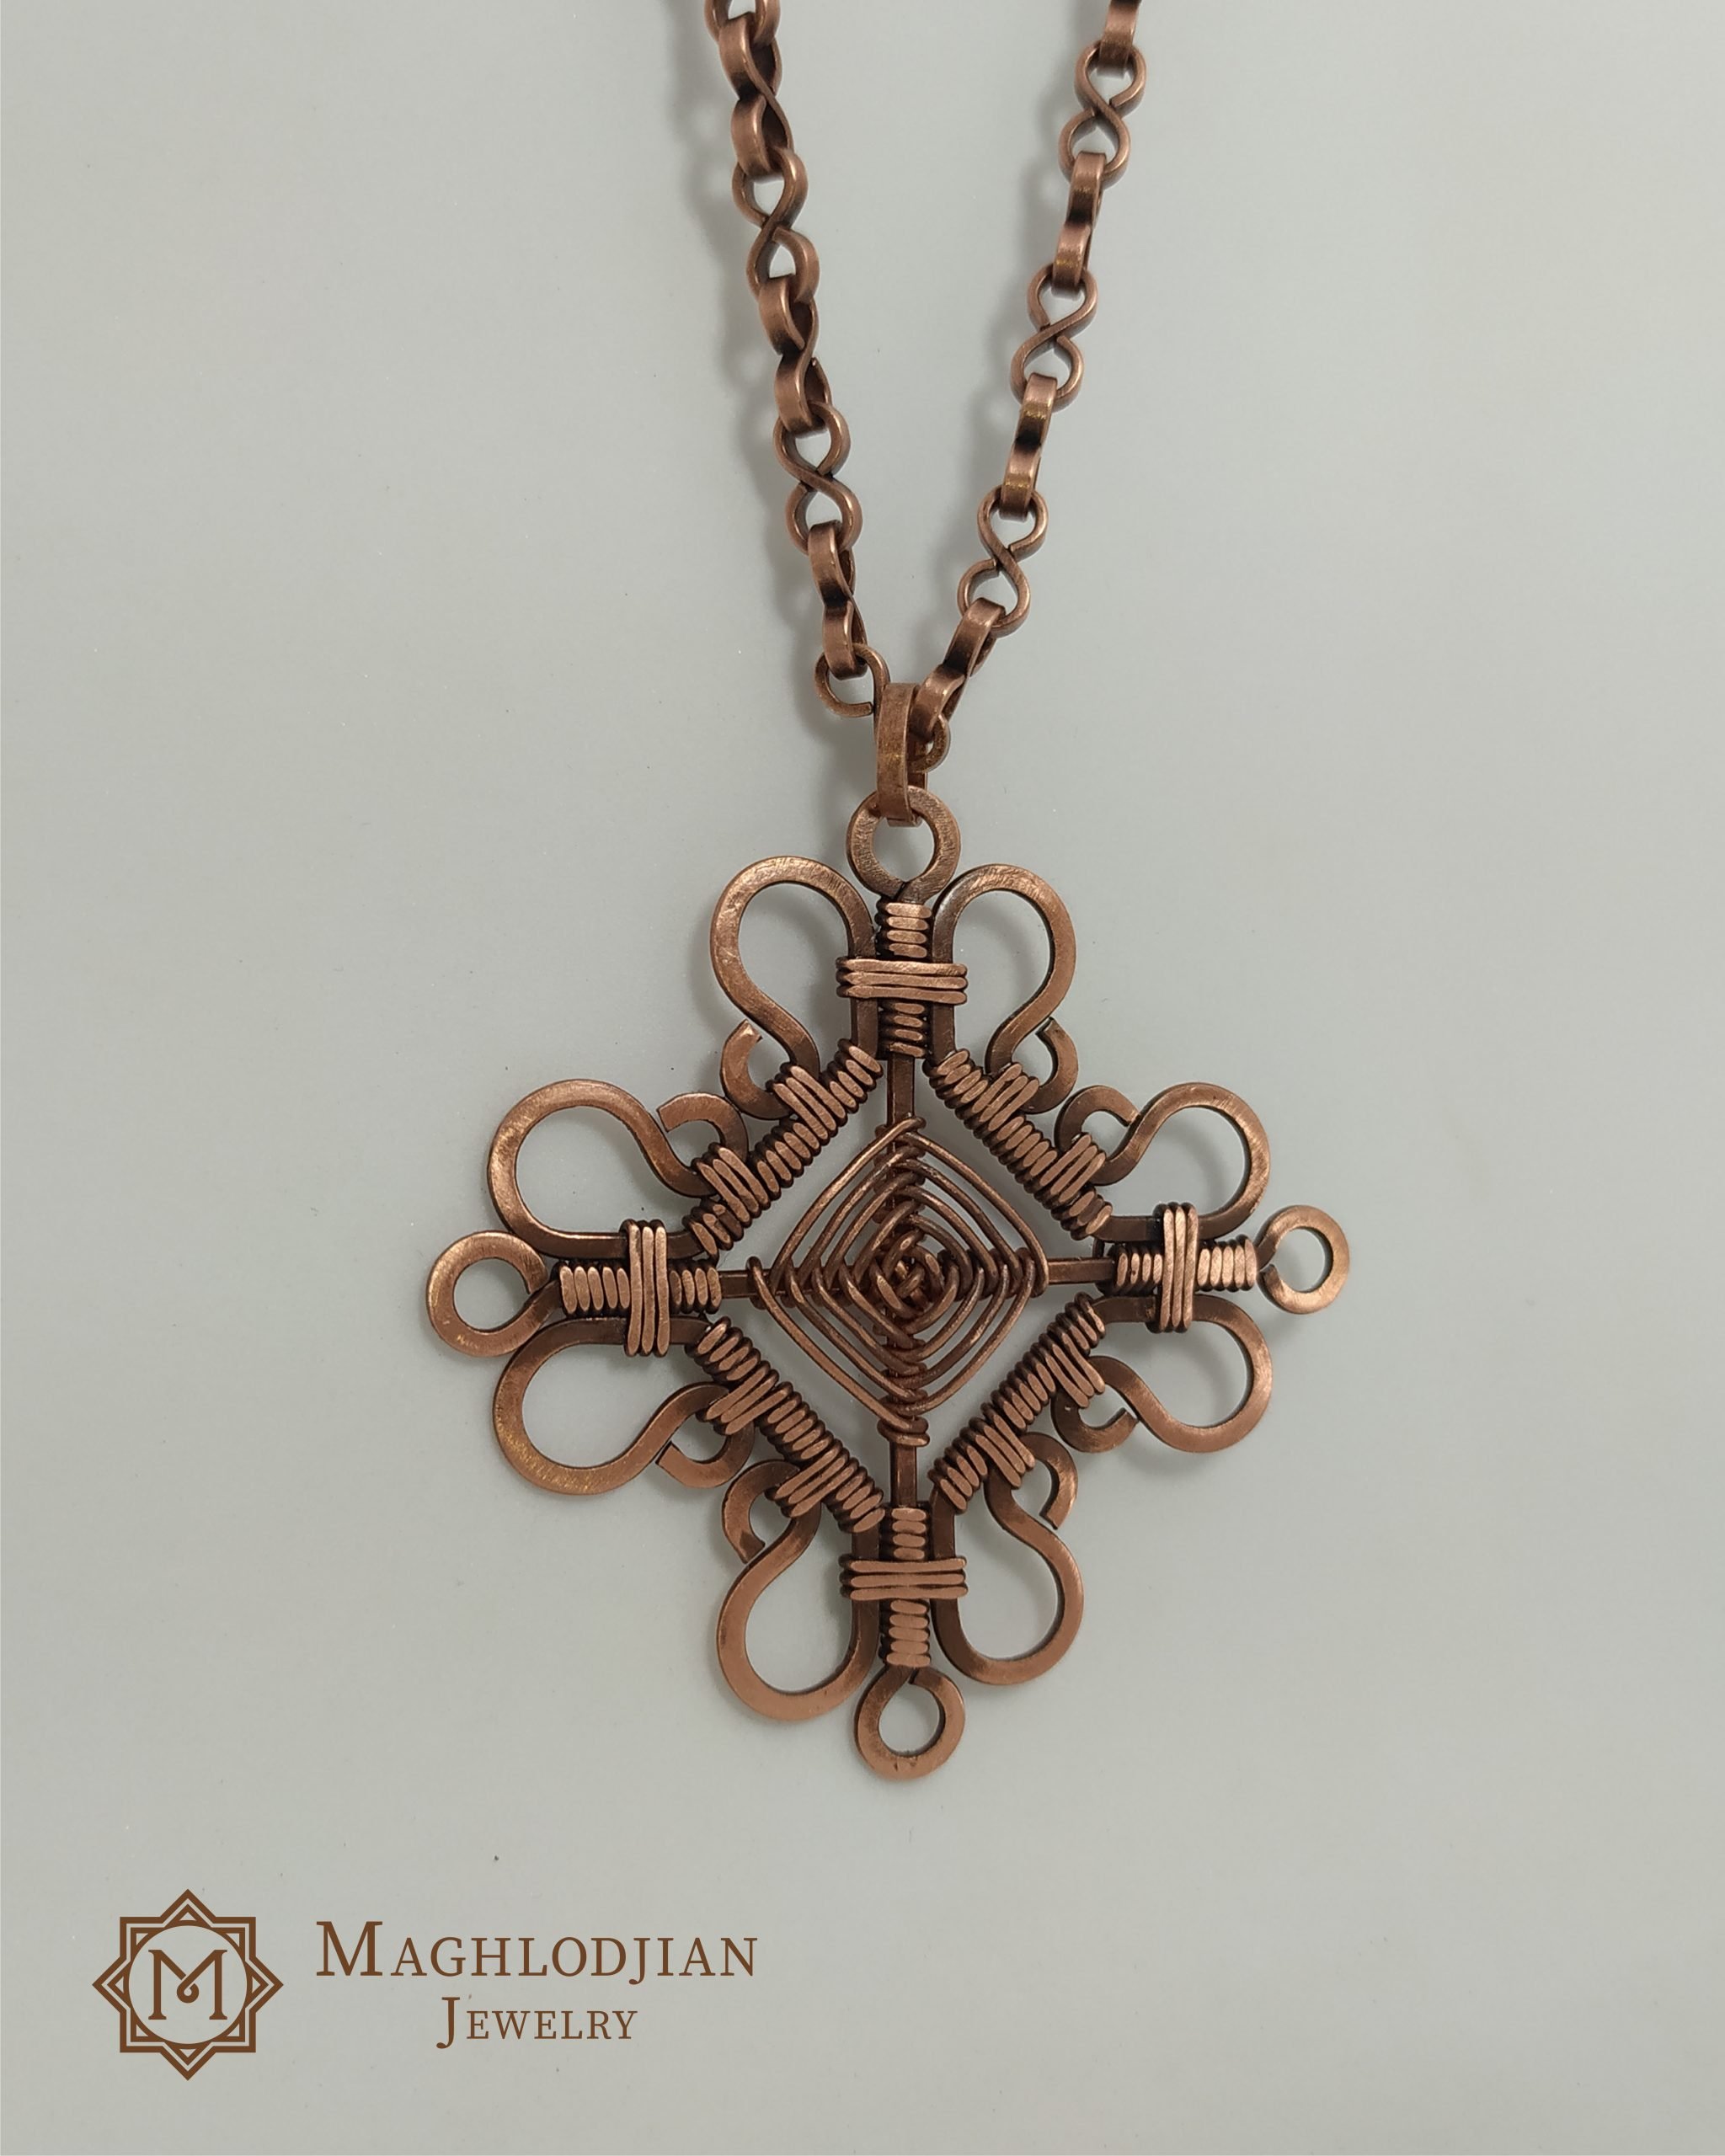 Pendant with Armenian ornaments